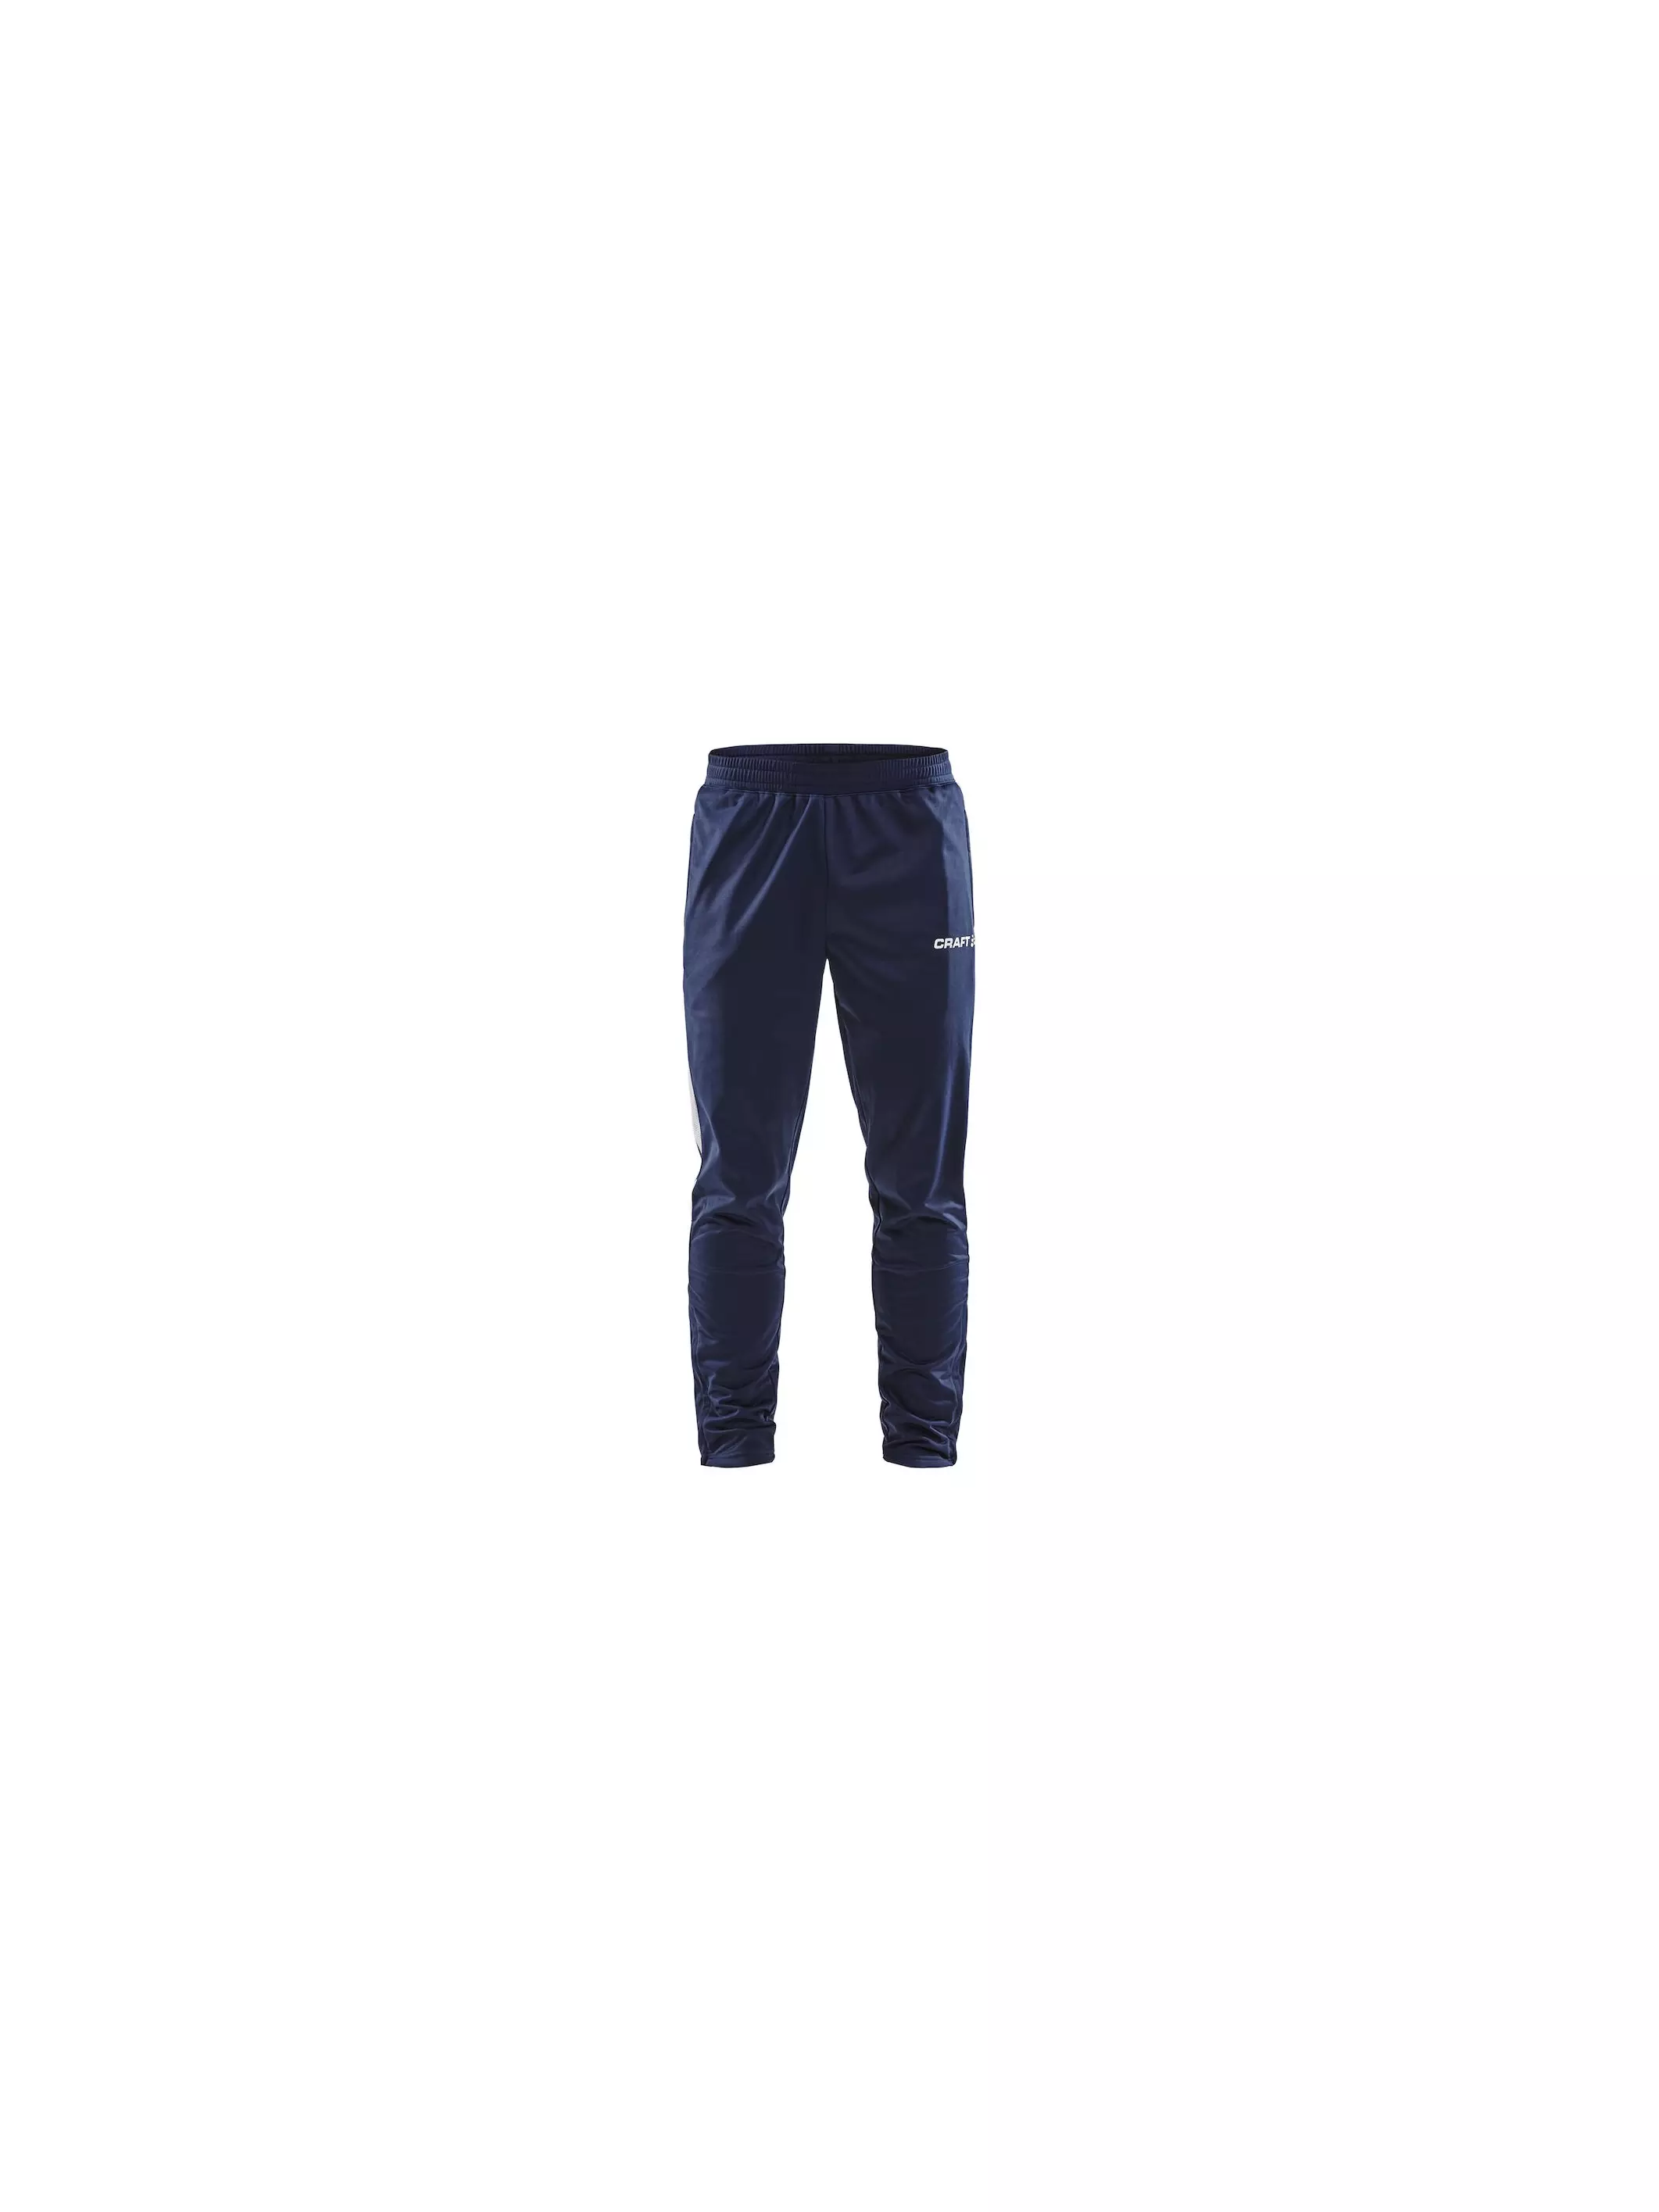 Pantalons & Collants Craft PRO CONTROL PANTS M - 1906713